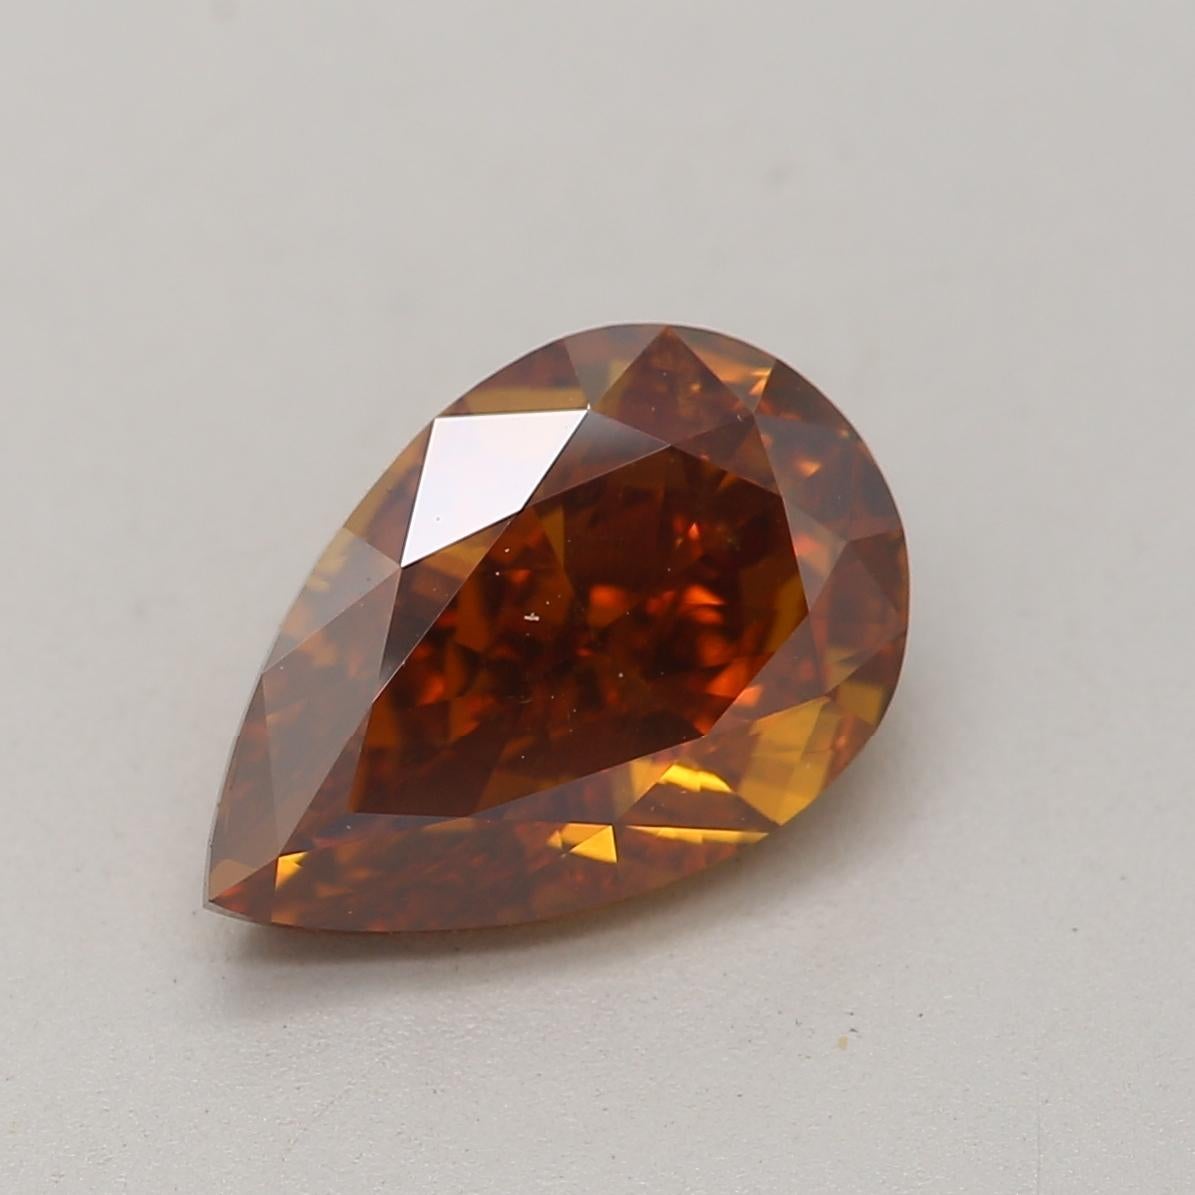 *100% NATURAL FANCY COLOUR DIAMOND*

✪ Diamond Details ✪

➛ Shape: Pear
➛ Colour Grade: Fancy Deep Orange Brown
➛ Carat: 1.02
➛ Clarity: Si2
➛ GIA Certified 

^FEATURES OF THE DIAMOND^

This 1.02 carat diamond falls into the mid-range of diamond